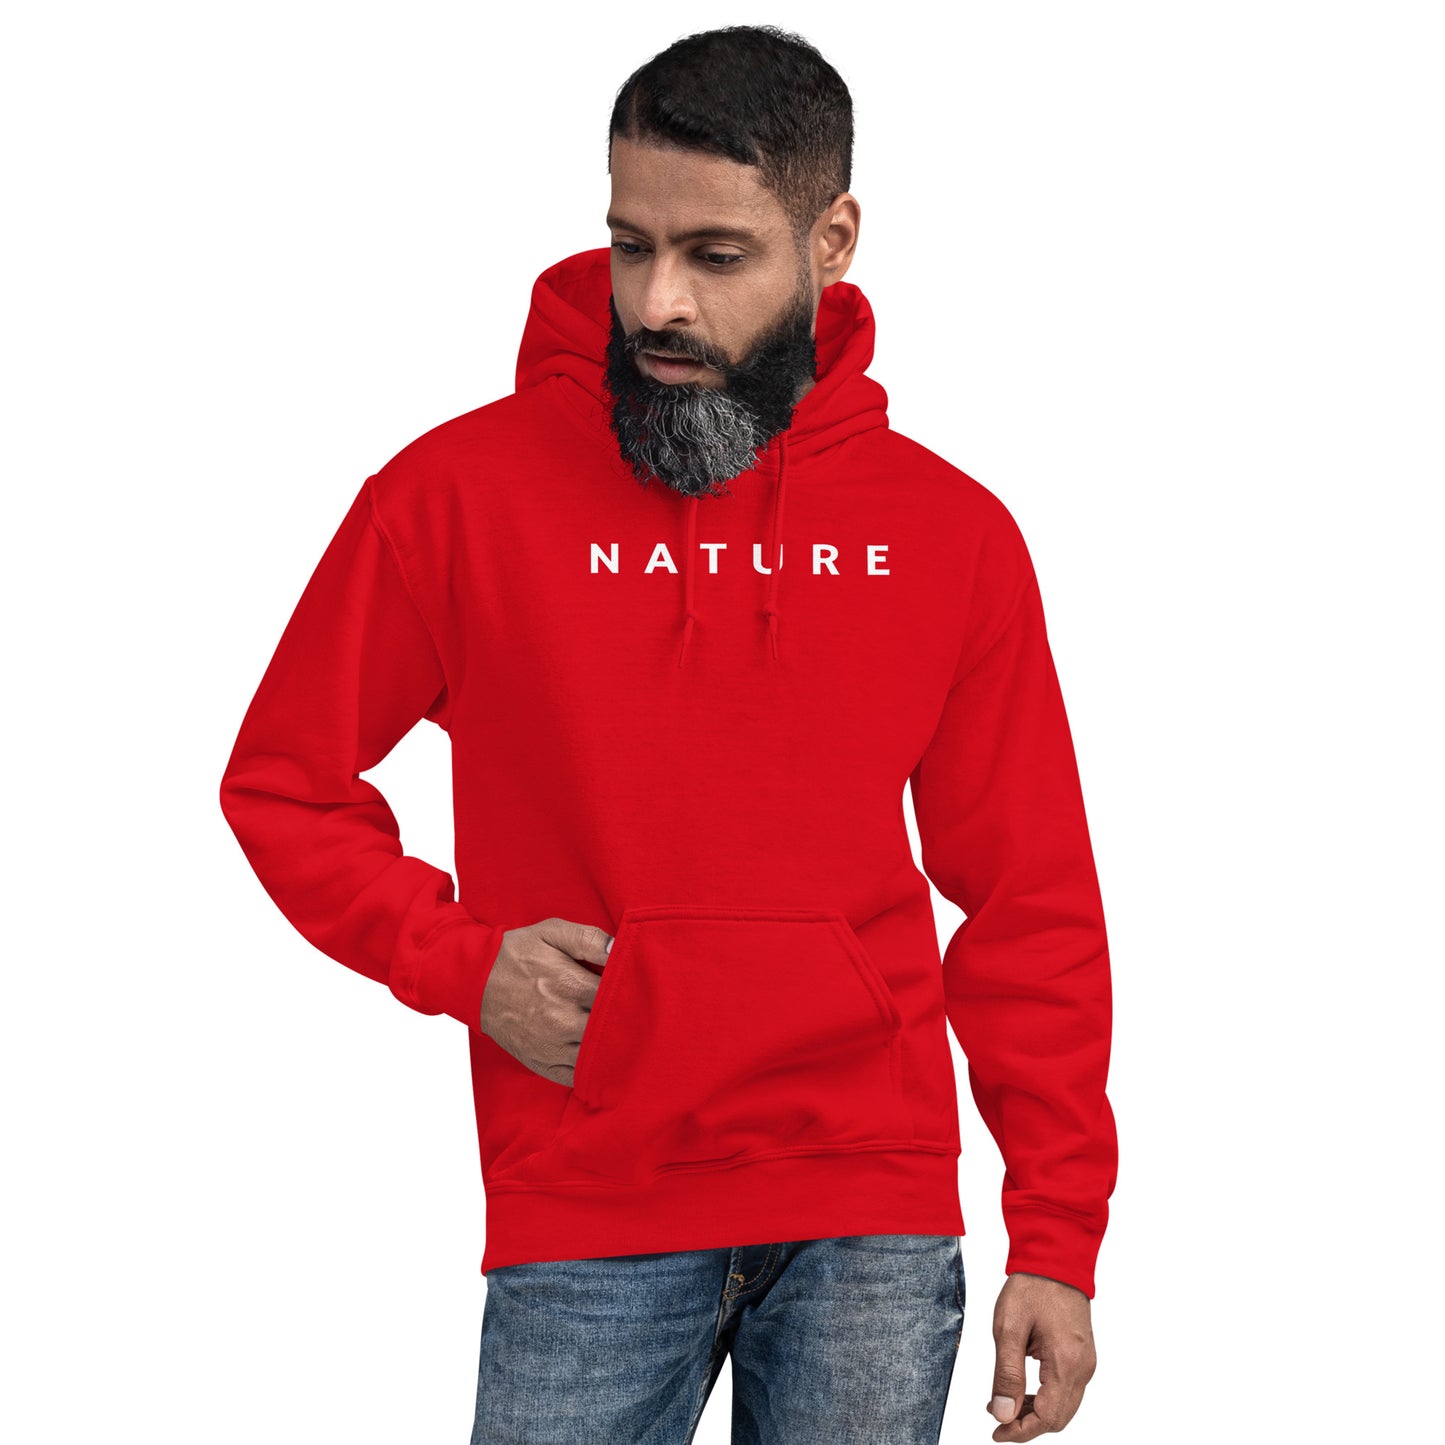 Nature Pullover Hooded Sweatshirt